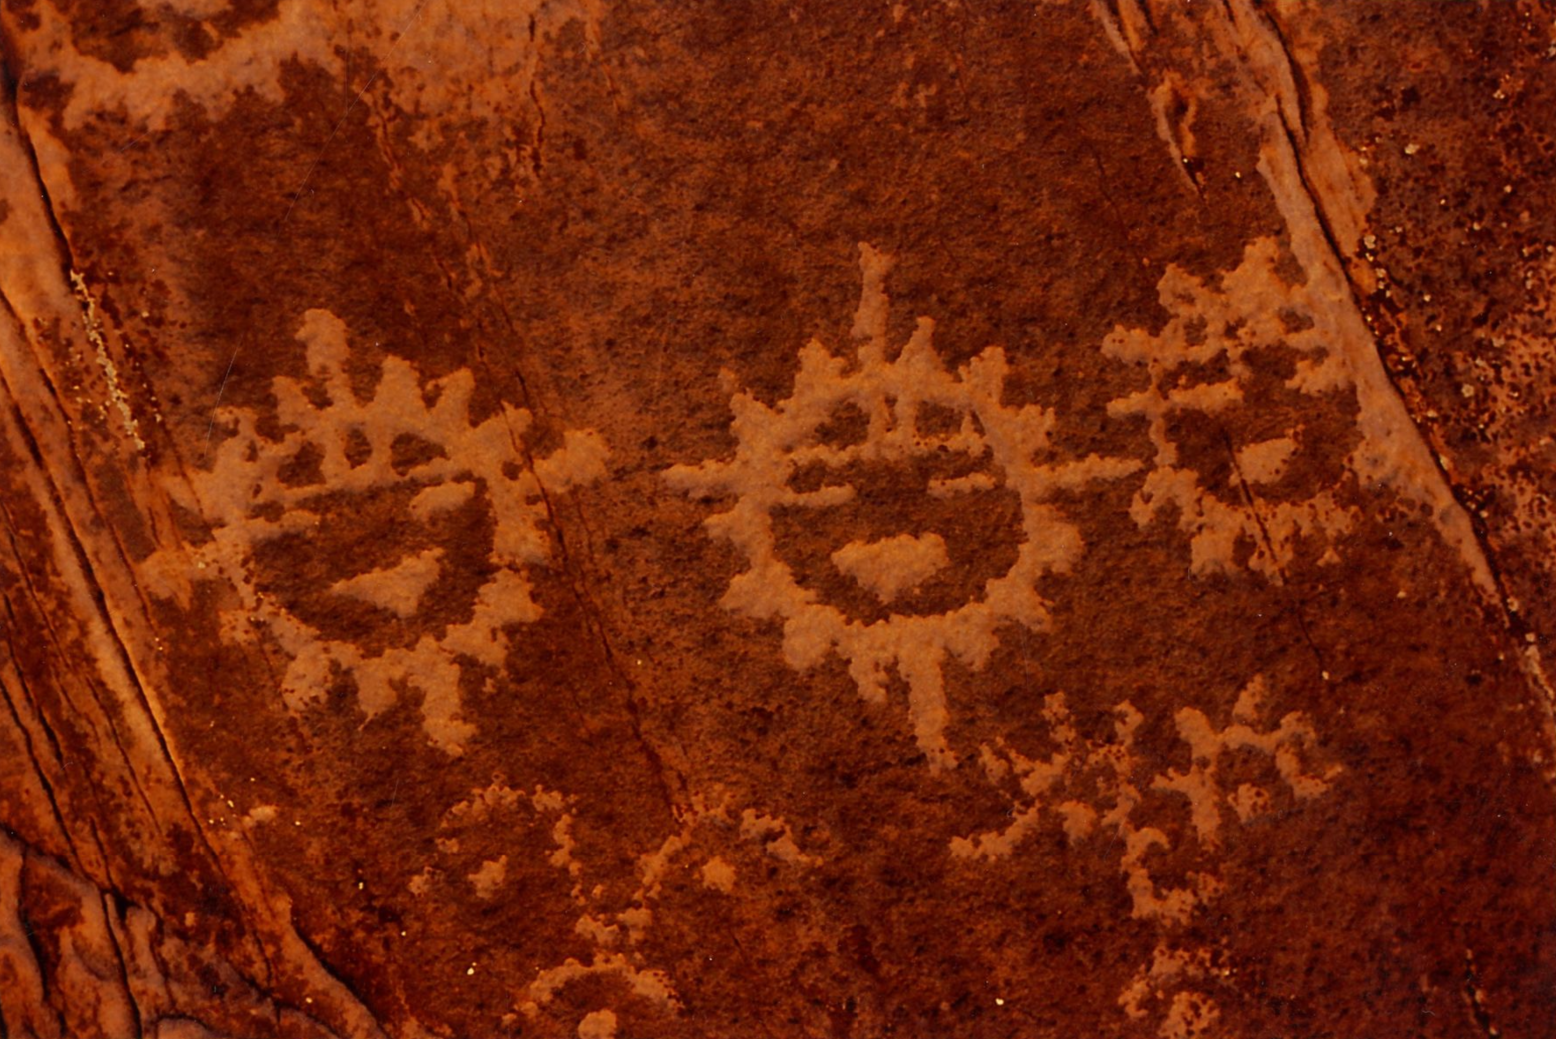 Hopi petroglyph showing three figures representing the Sun Kachina, Tawa deity